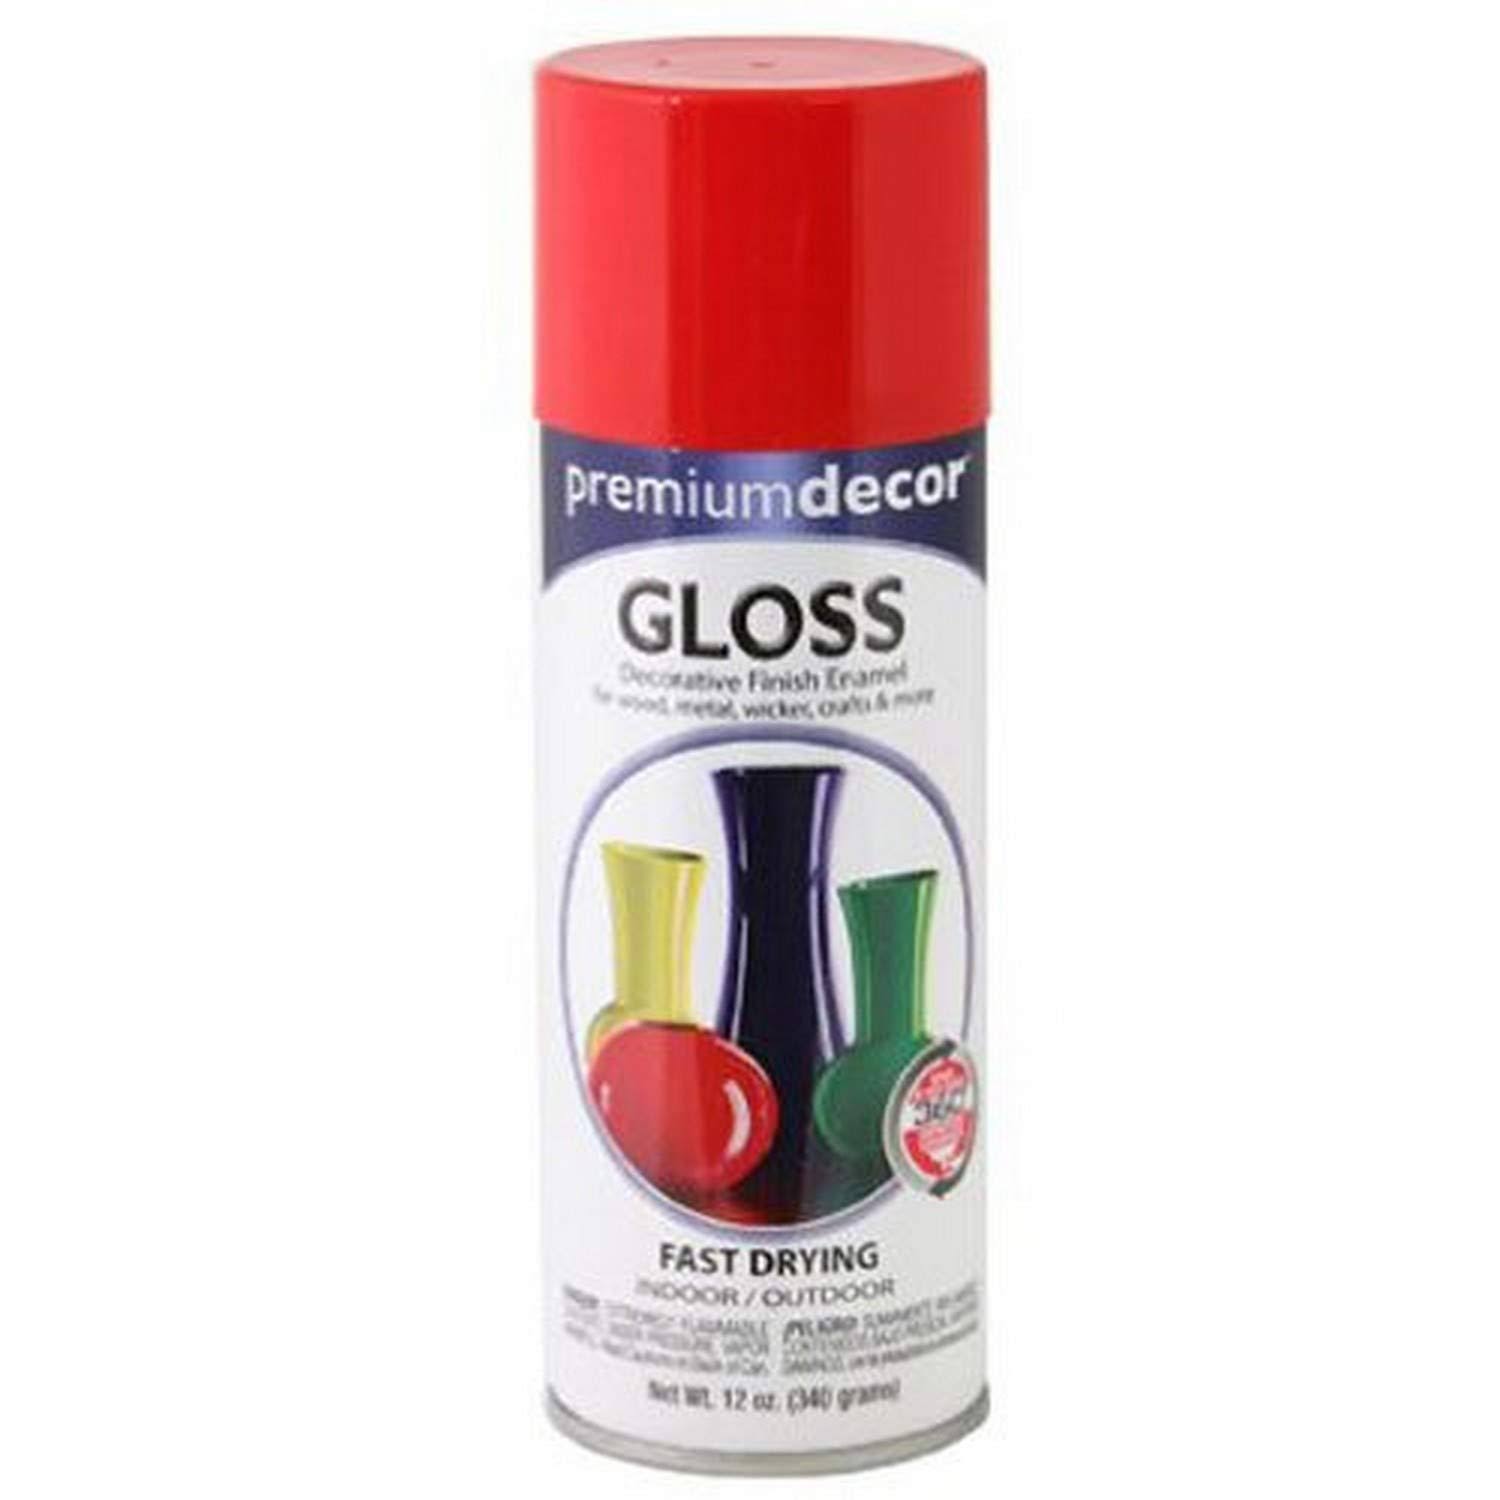 Premium Decor 12 oz Hot Red Gloss Spray Enamel